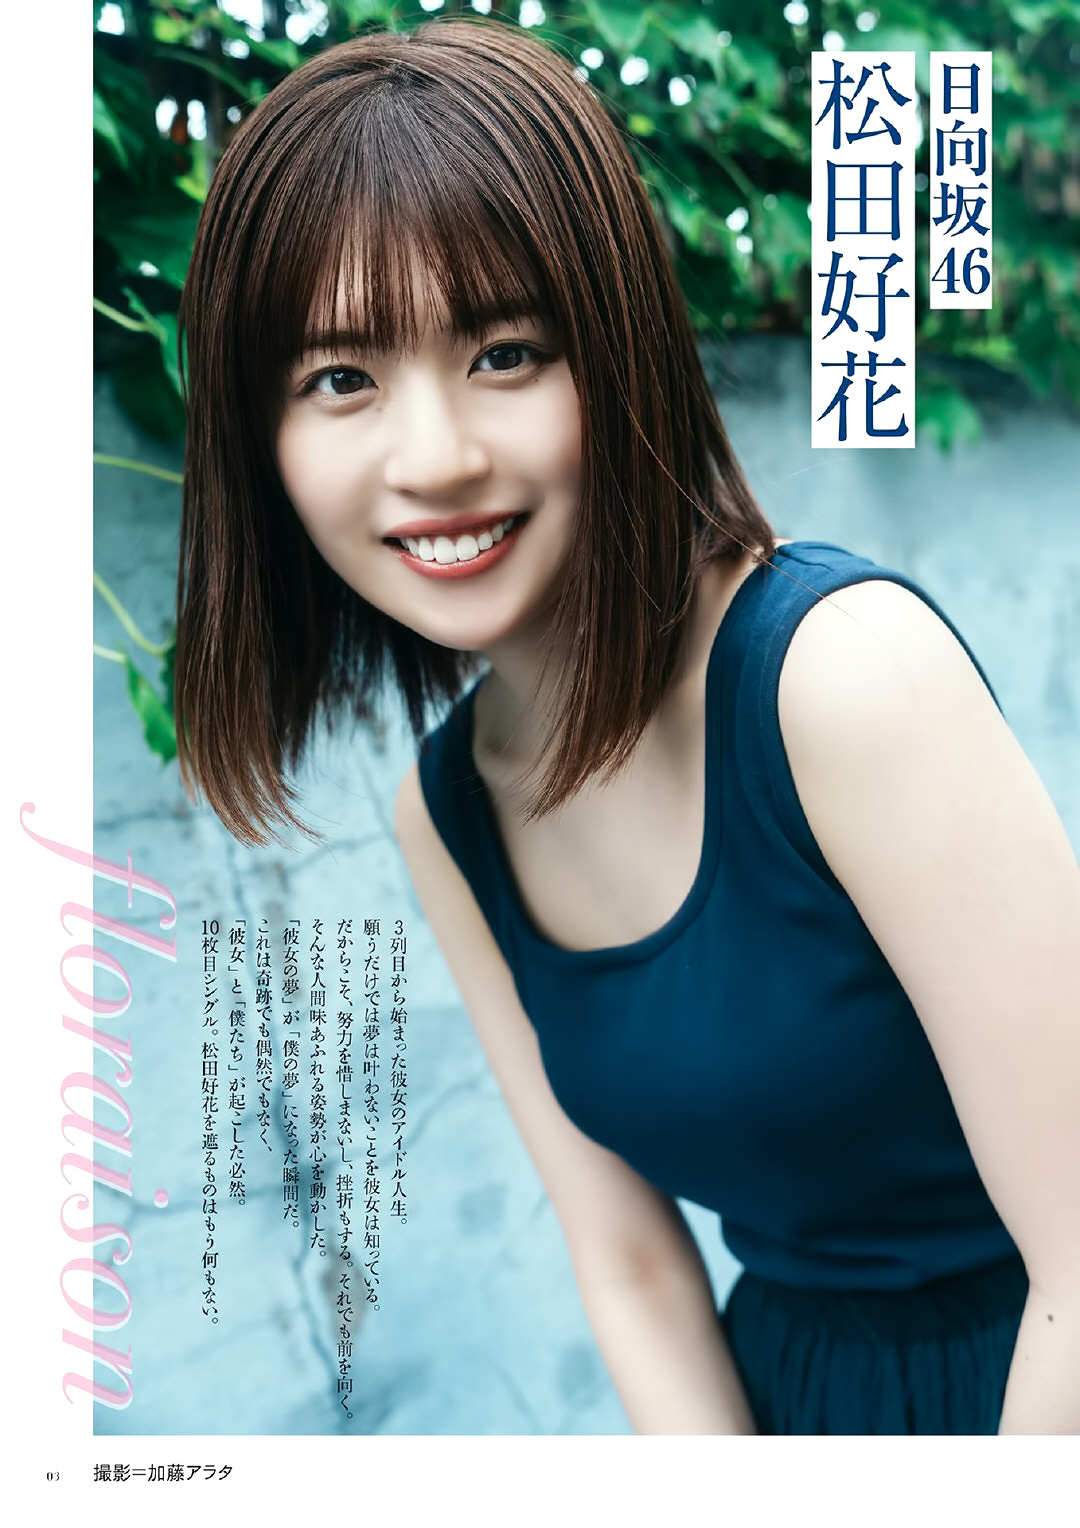 Hinatazaka 46 Matsuda Konoka BRODY August issue